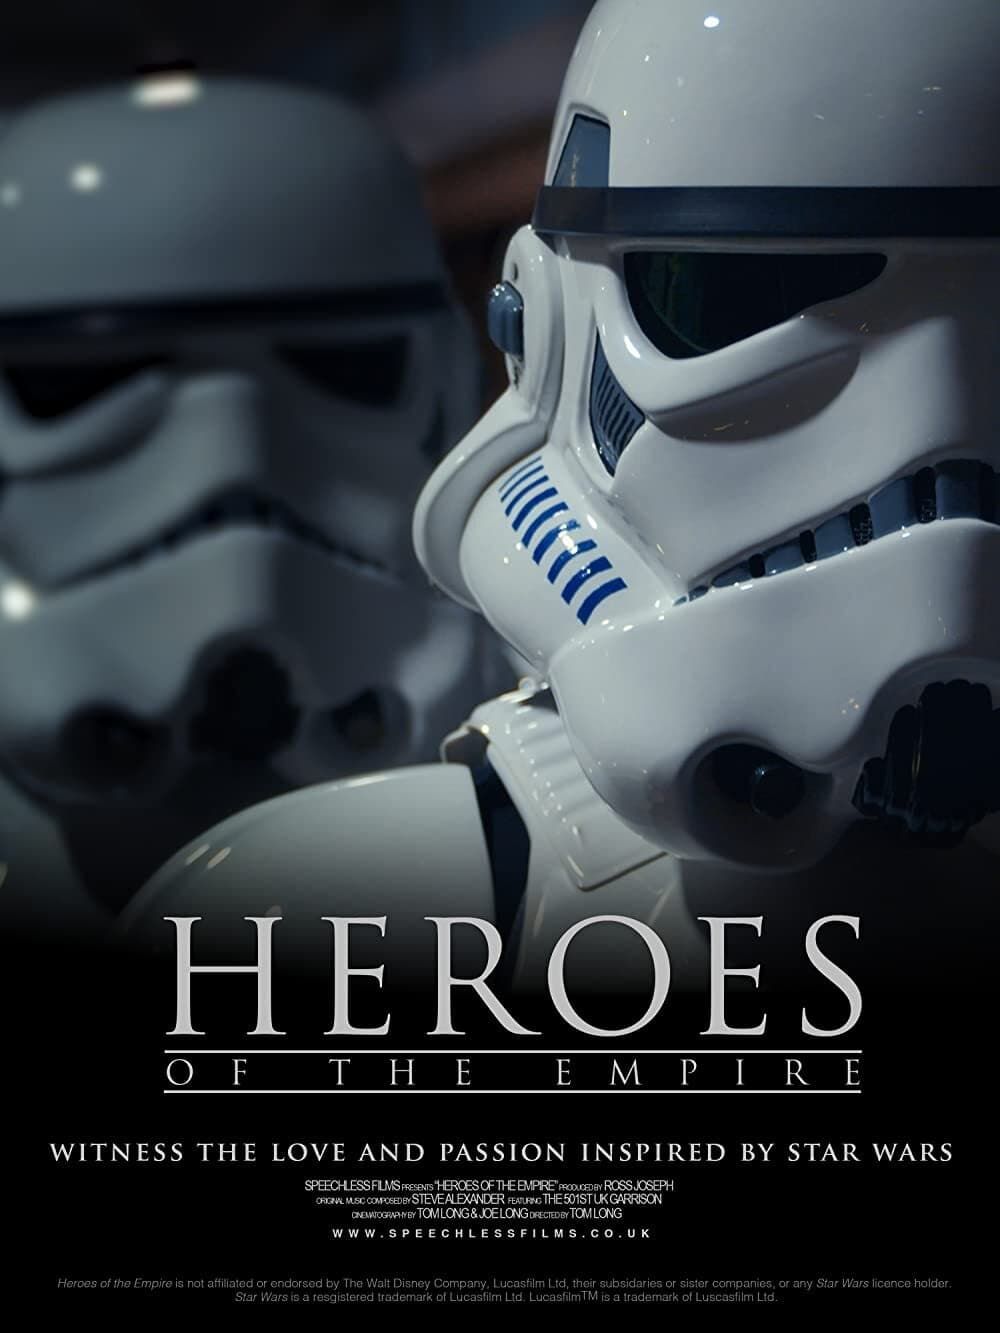 Star Wars JEDI JUNKIES (2013) Dedicated Star War Fans Documentary - New DVD  767685283974